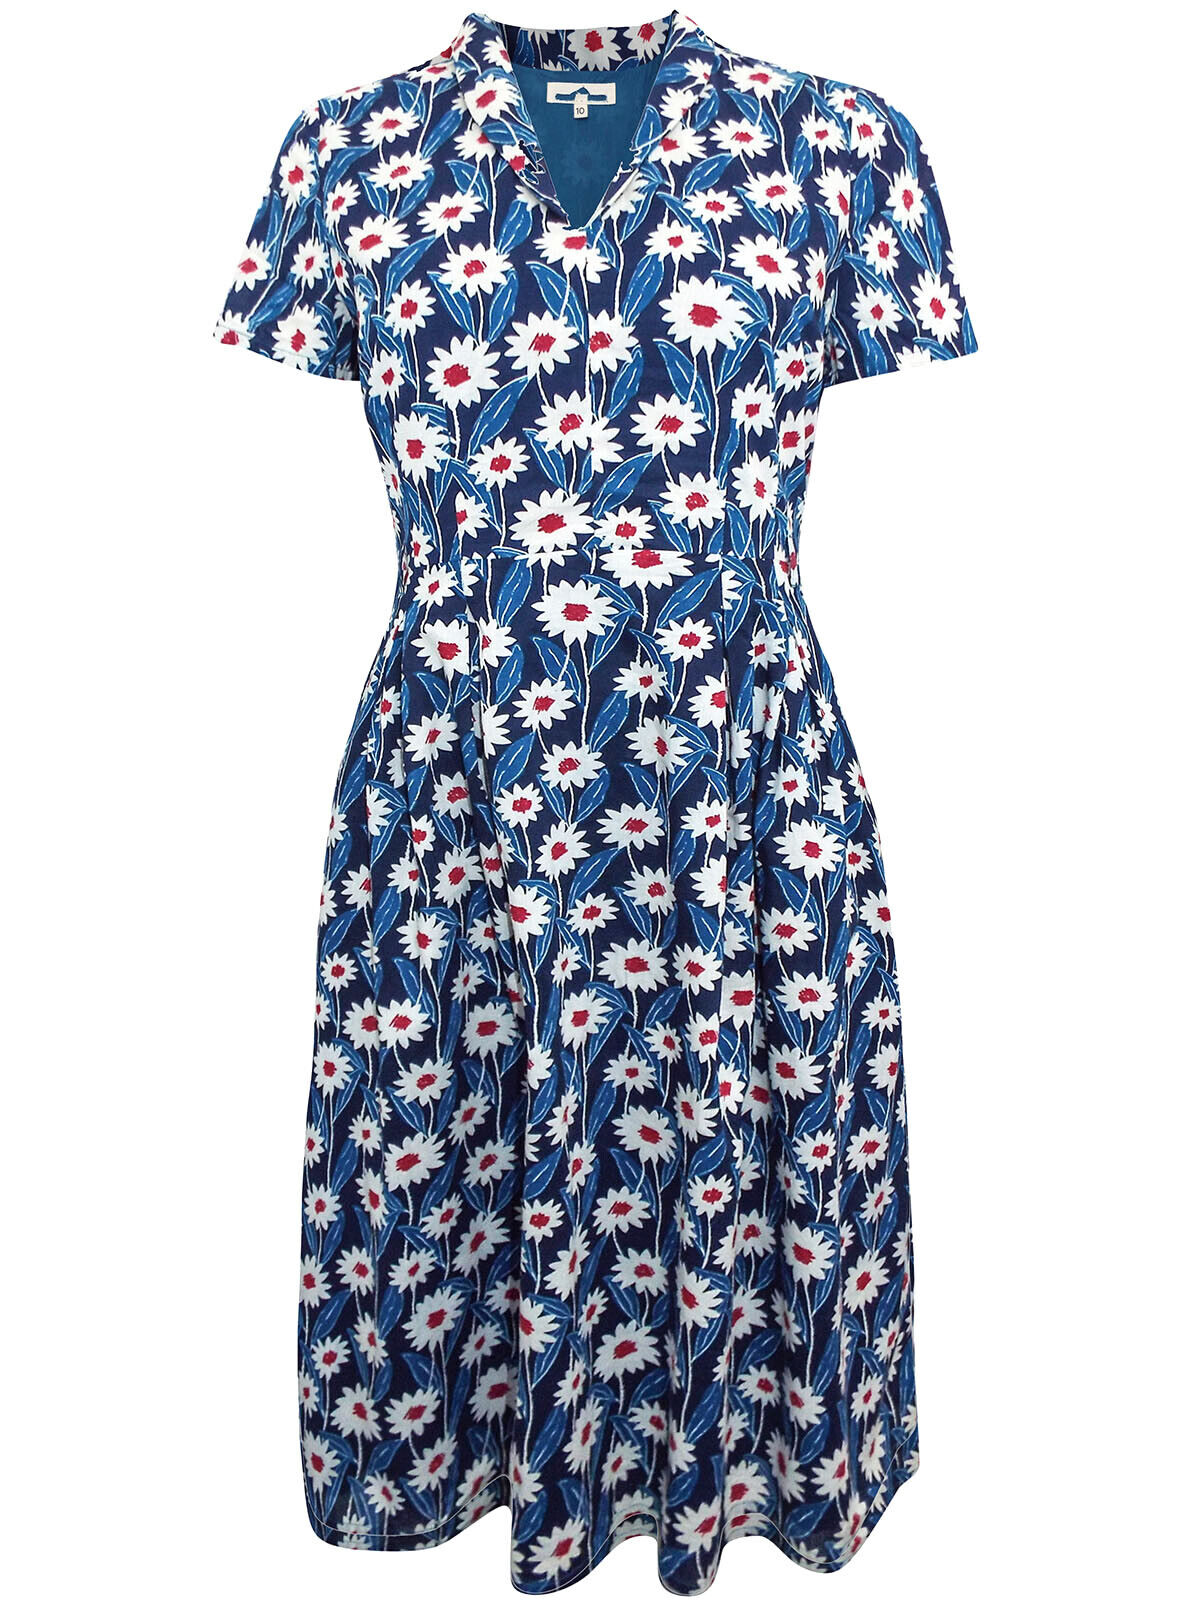 EX SEASALT Blue Daisy Stem Swell Top Terrace Dress Size 10 Tall RRP £69.95